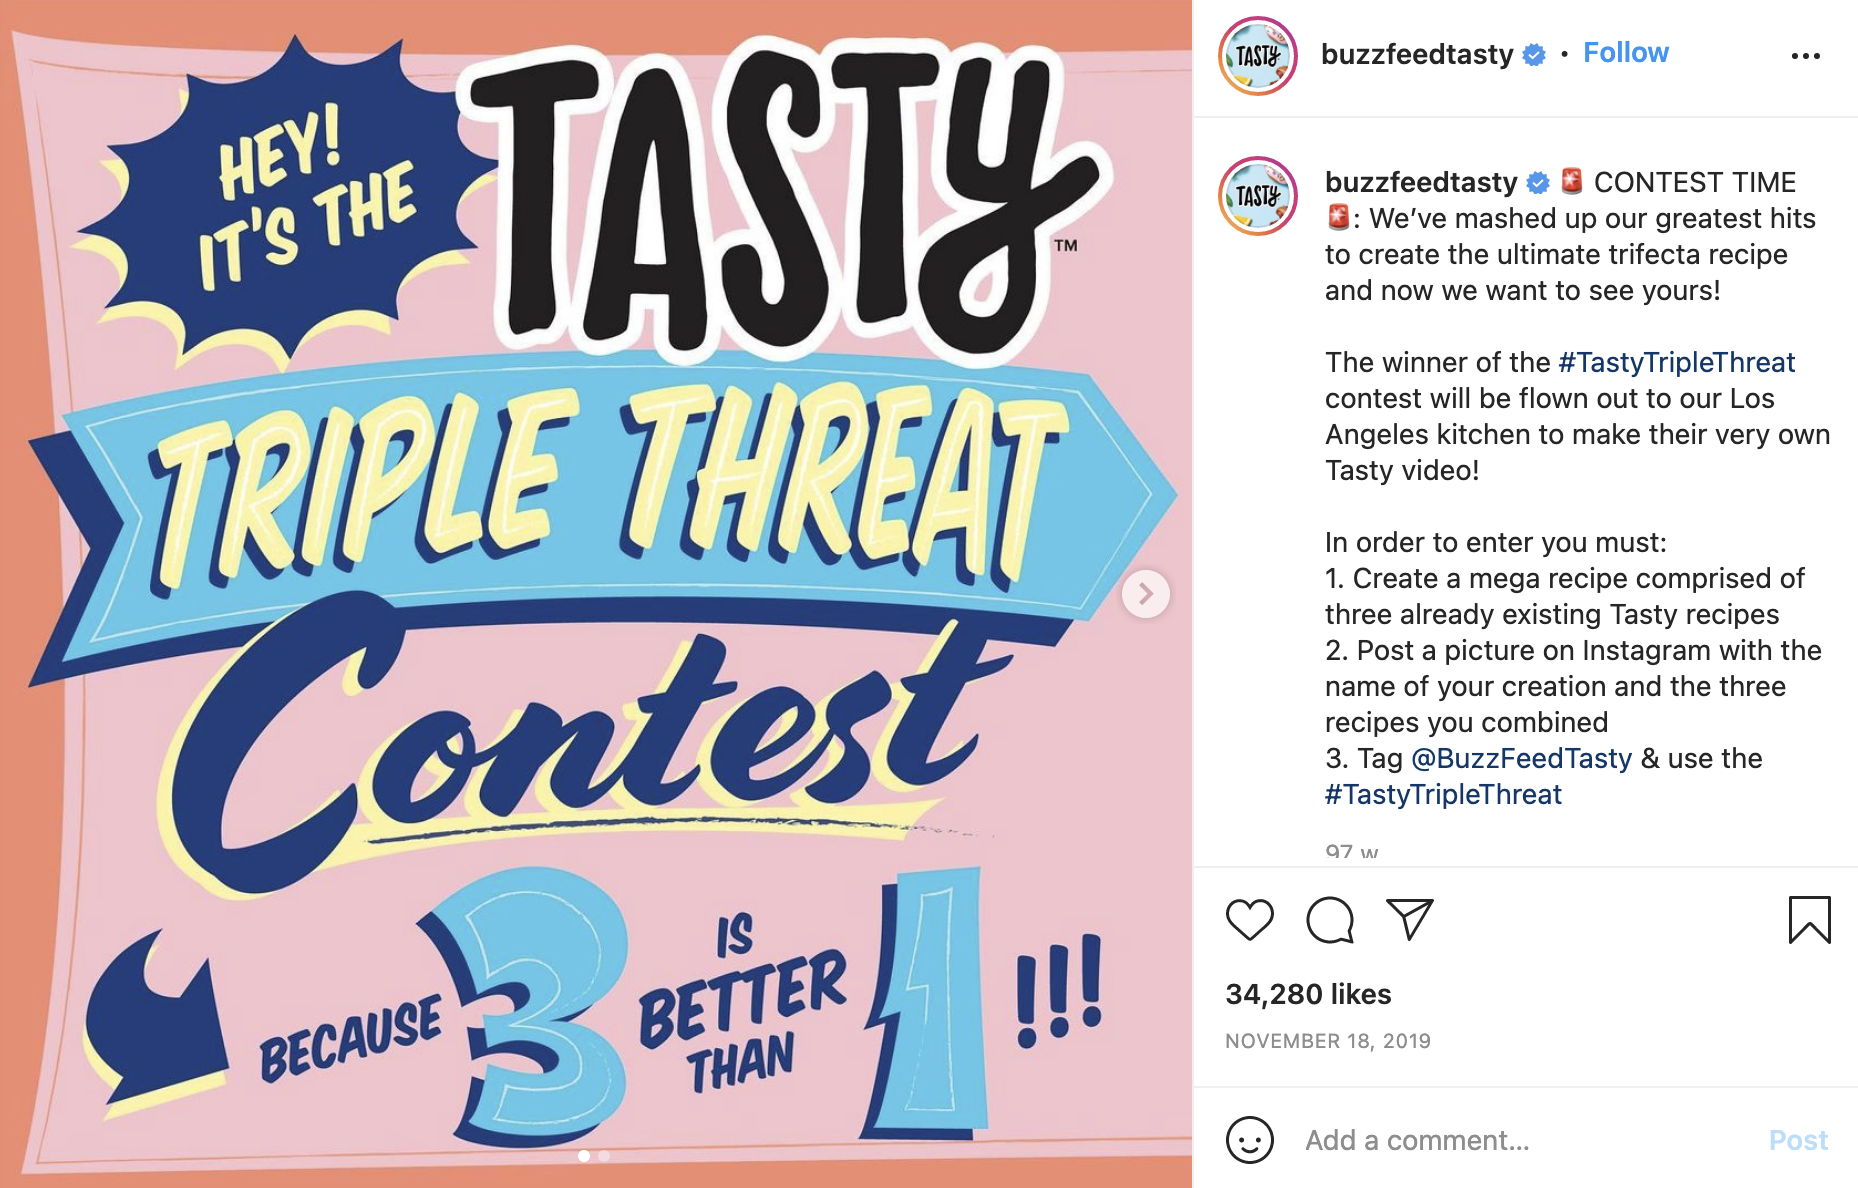 Bussfeed Tasty Contest